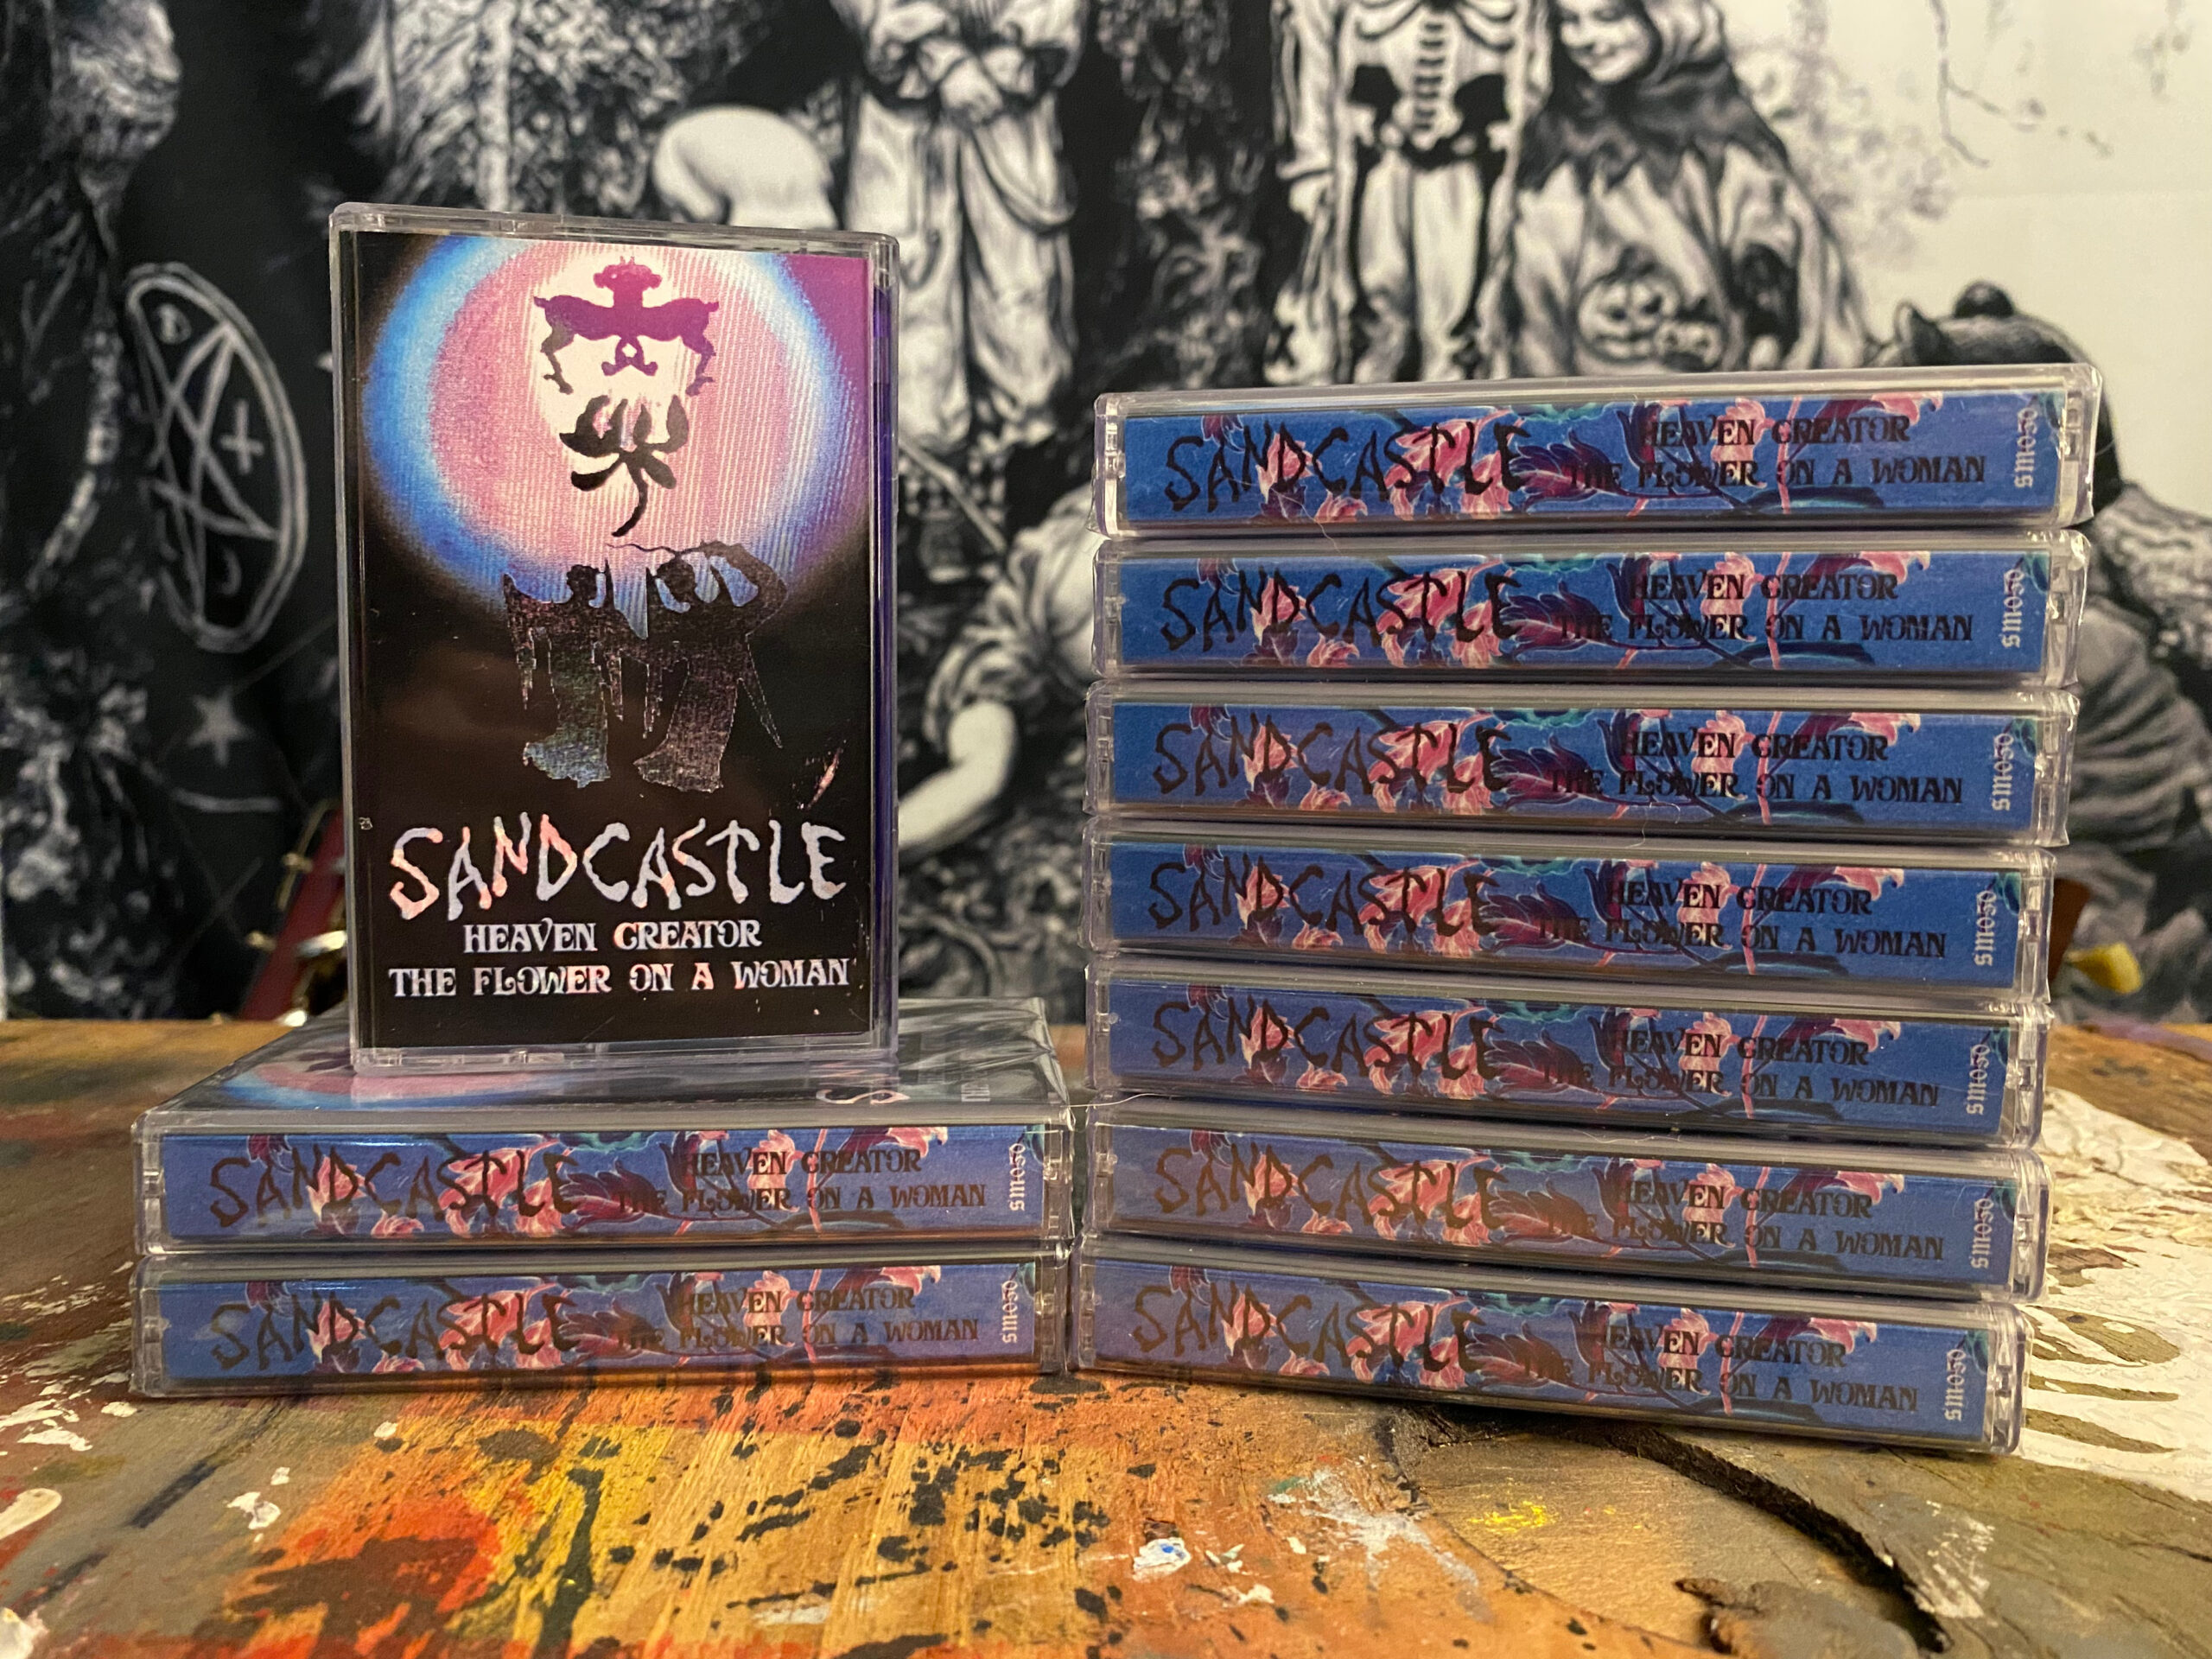 10 cassette tapes of sandcastle's album